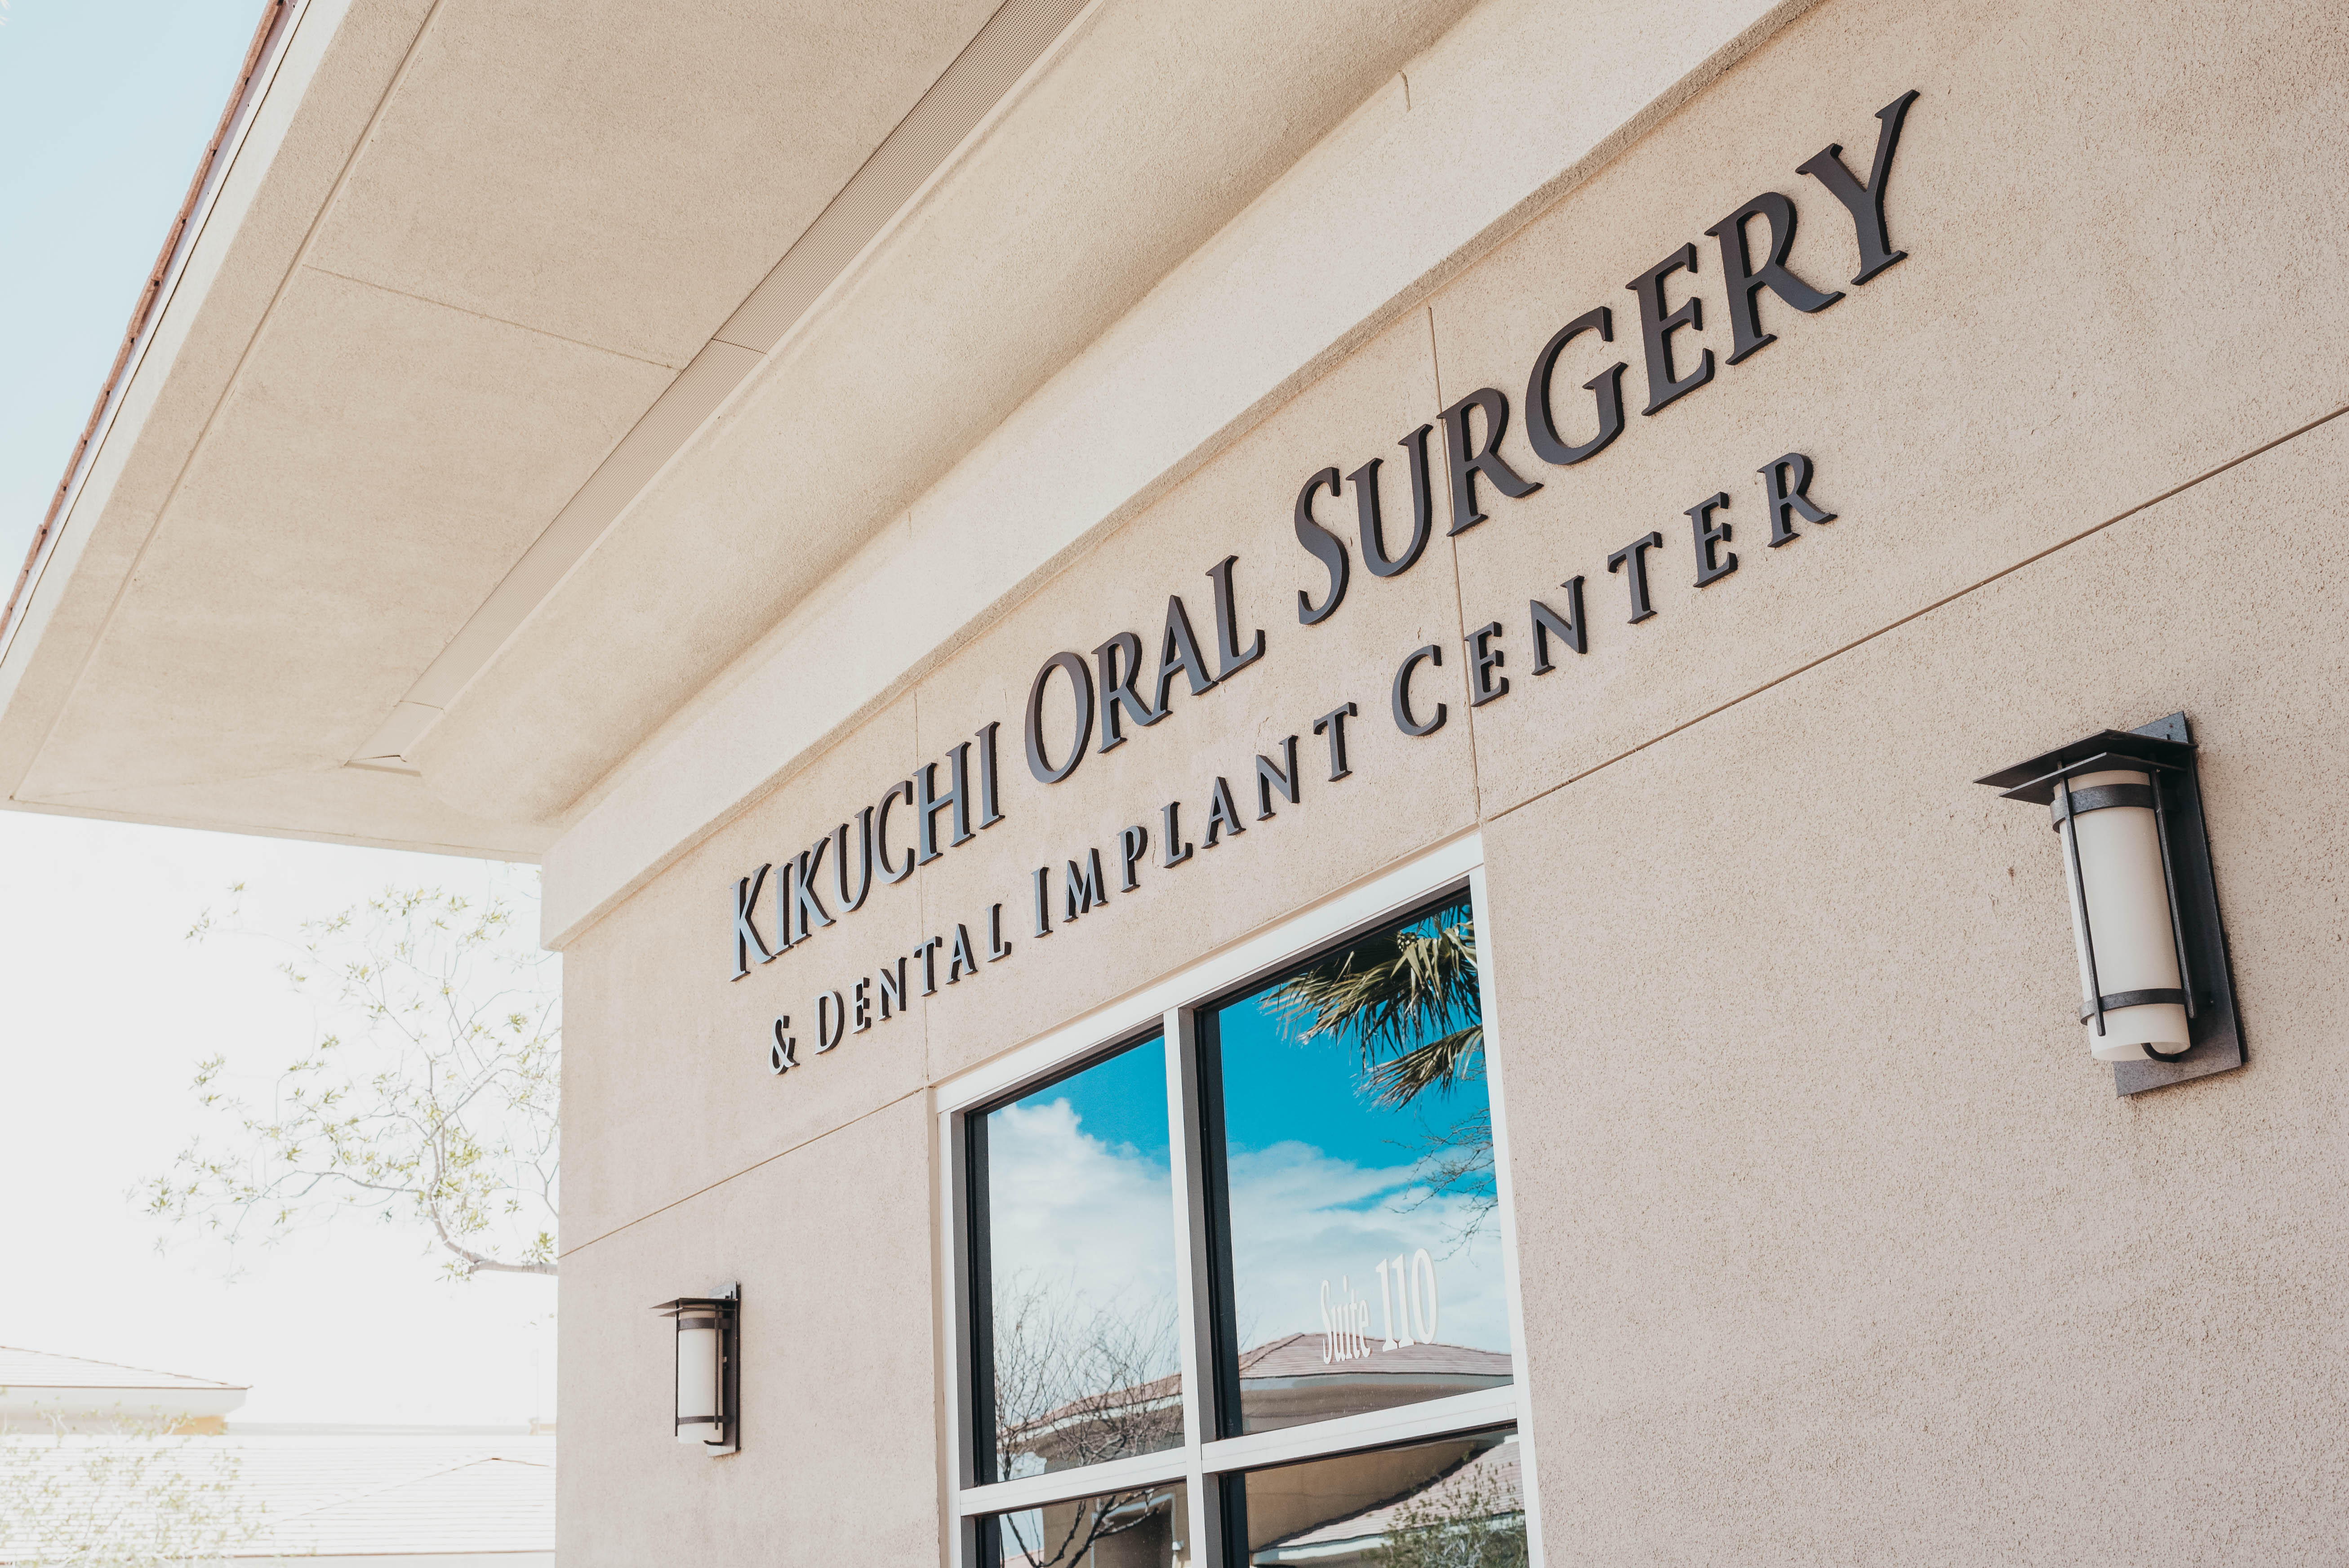 Kikuchi Oral Surgery & Dental Implant Center Photo